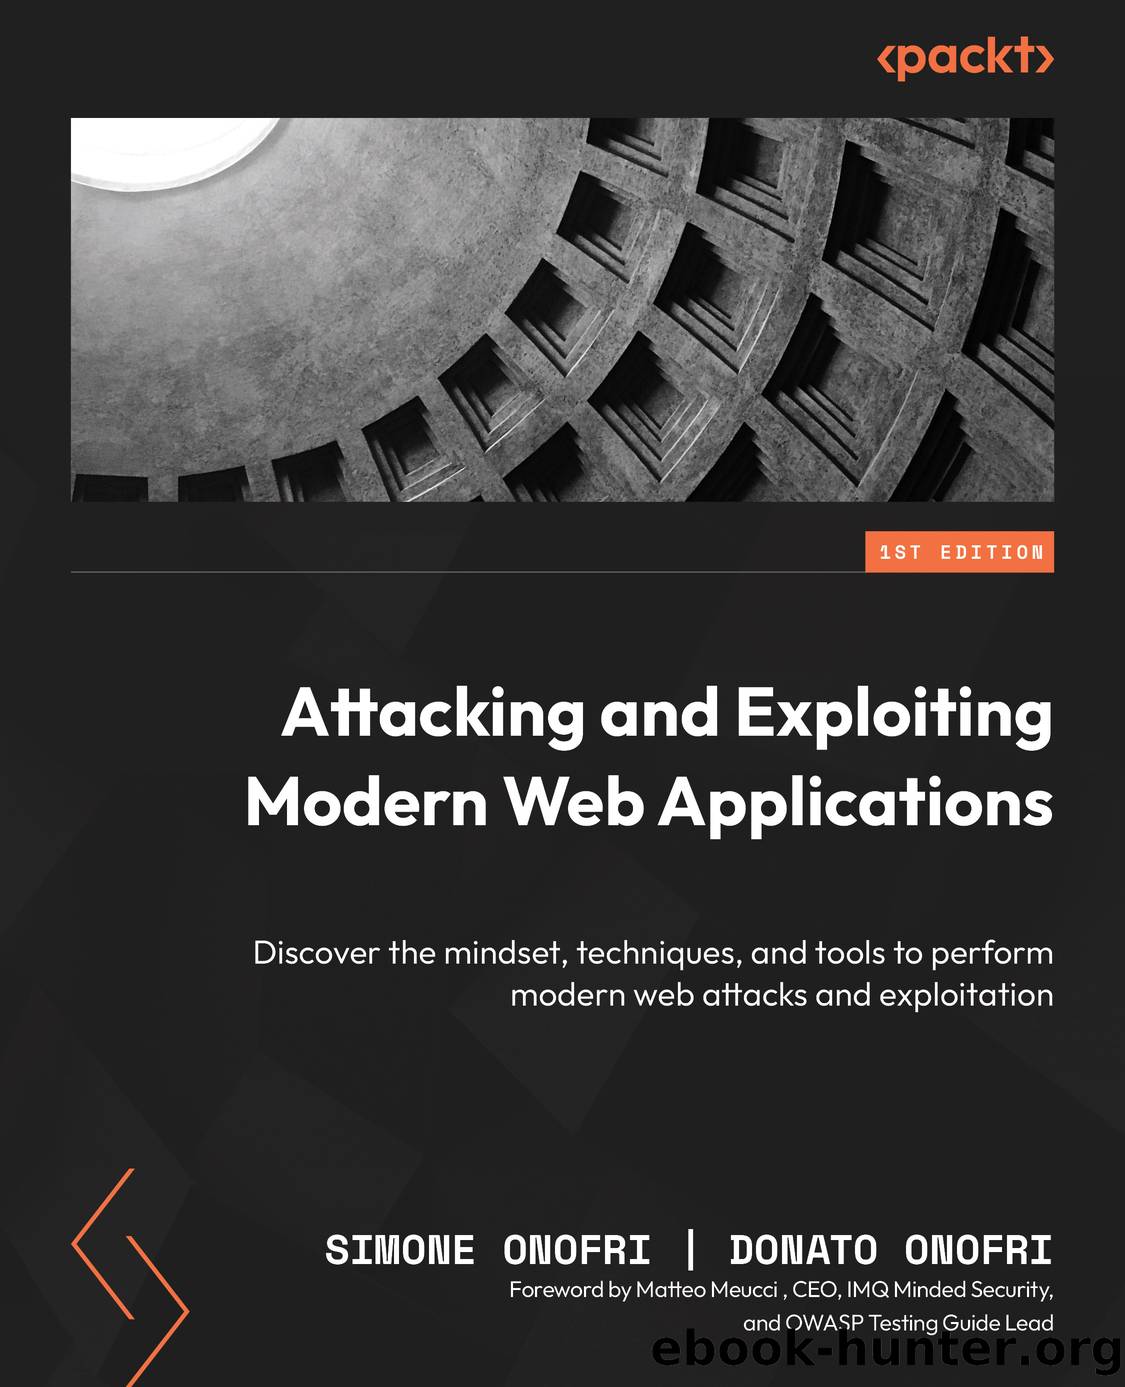 Attacking and Exploiting Modern Web Applications by Simone Onofri & Donato Onofri